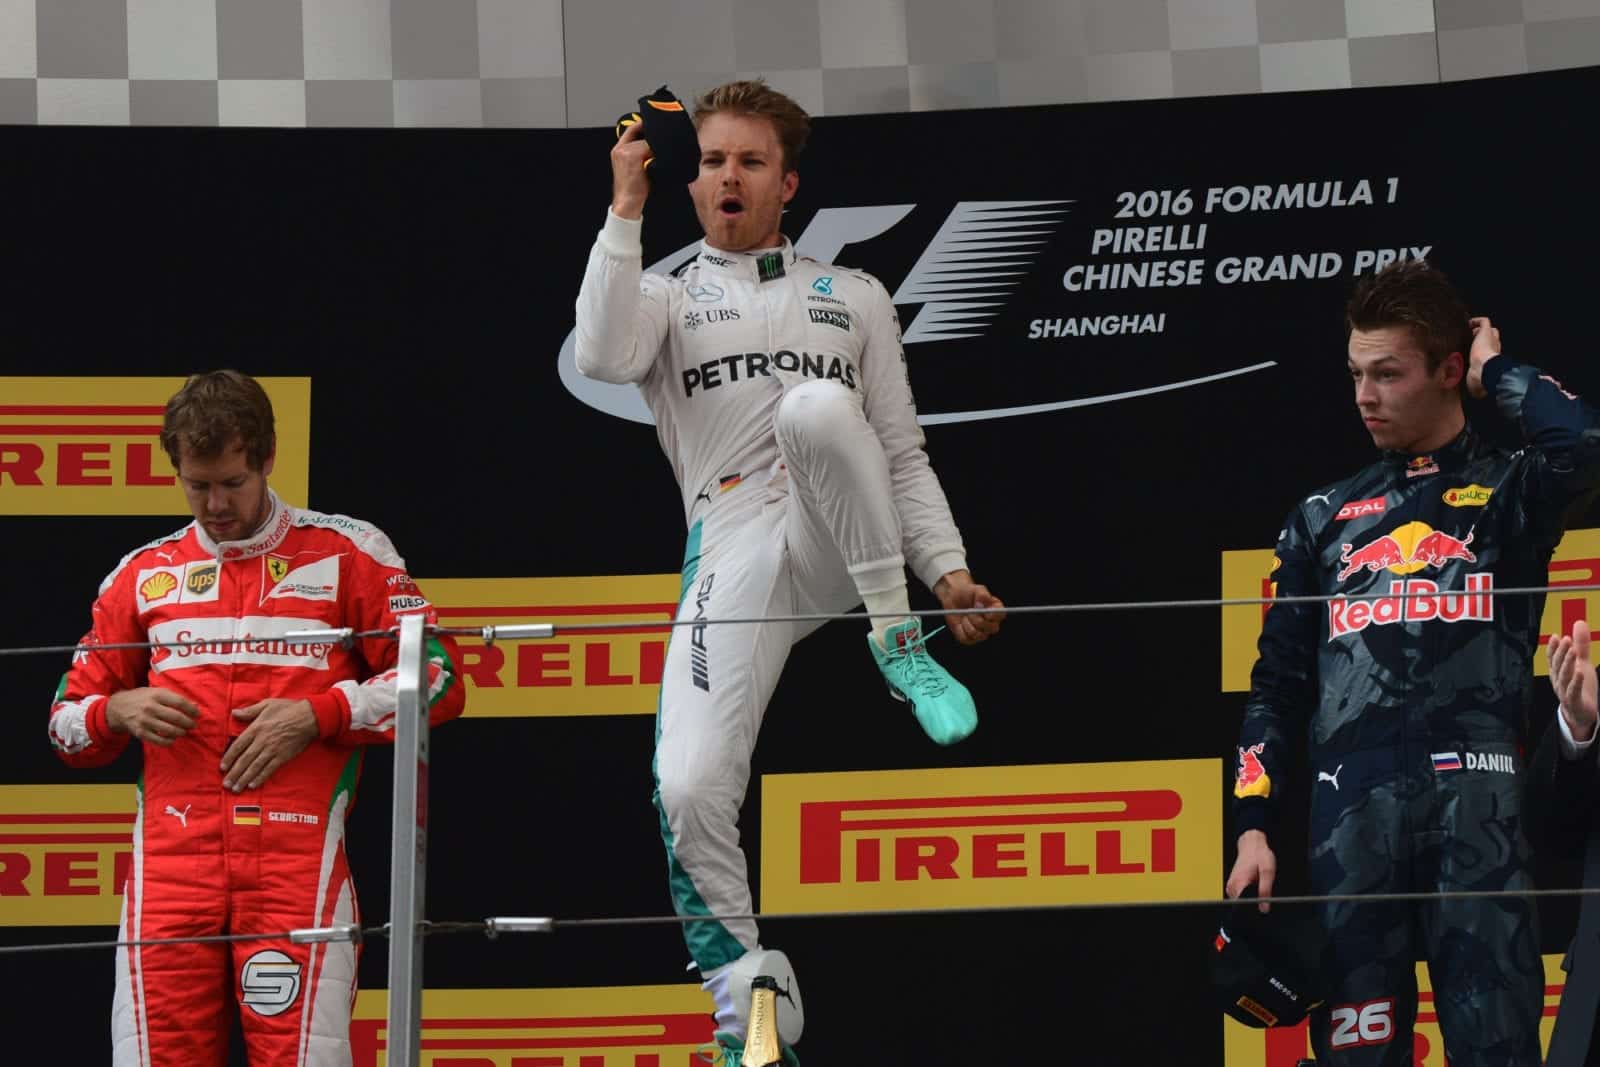 Nico Rosberg jumping in celebration